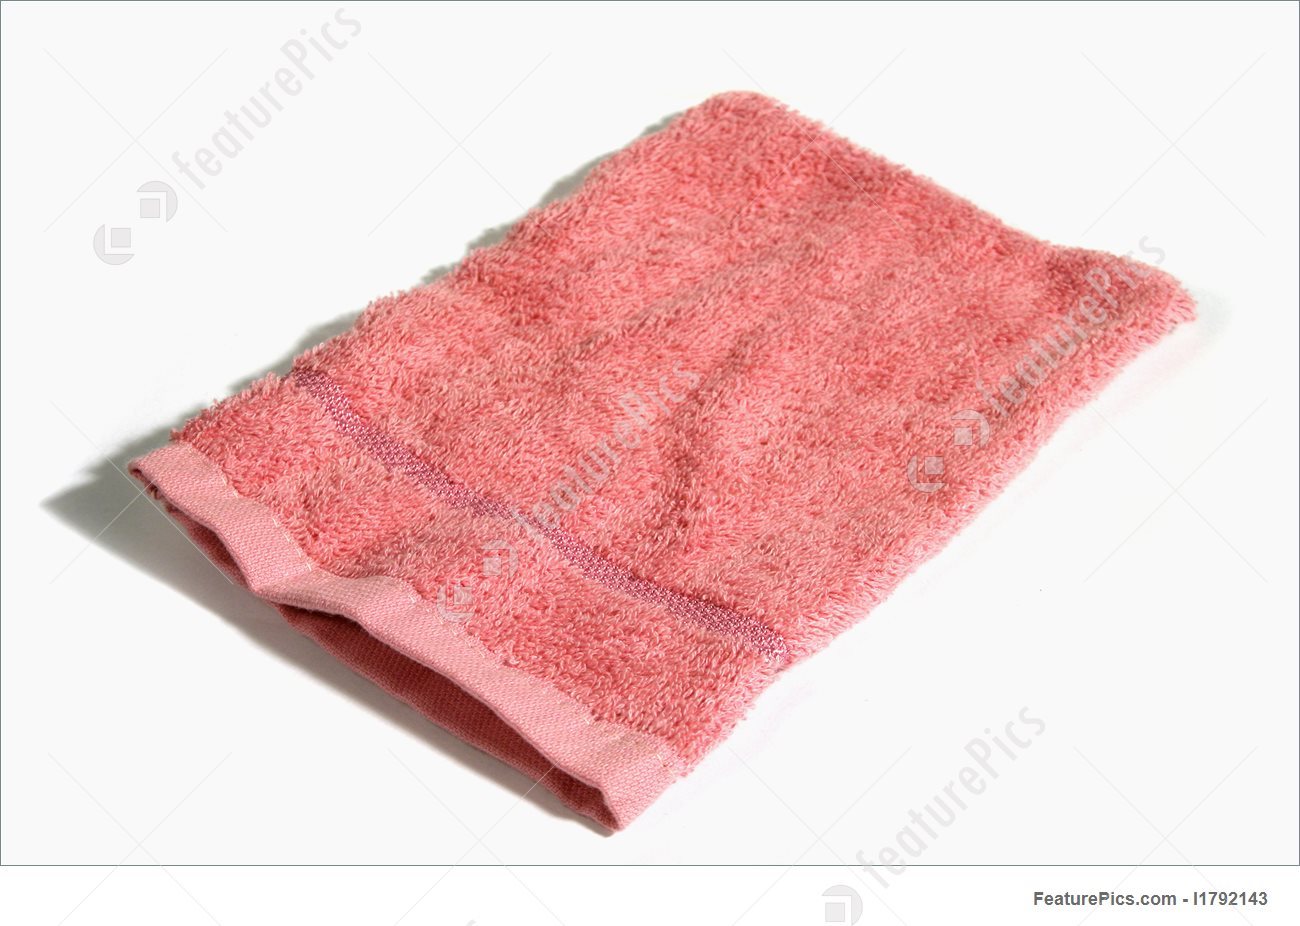 Face towel clipart